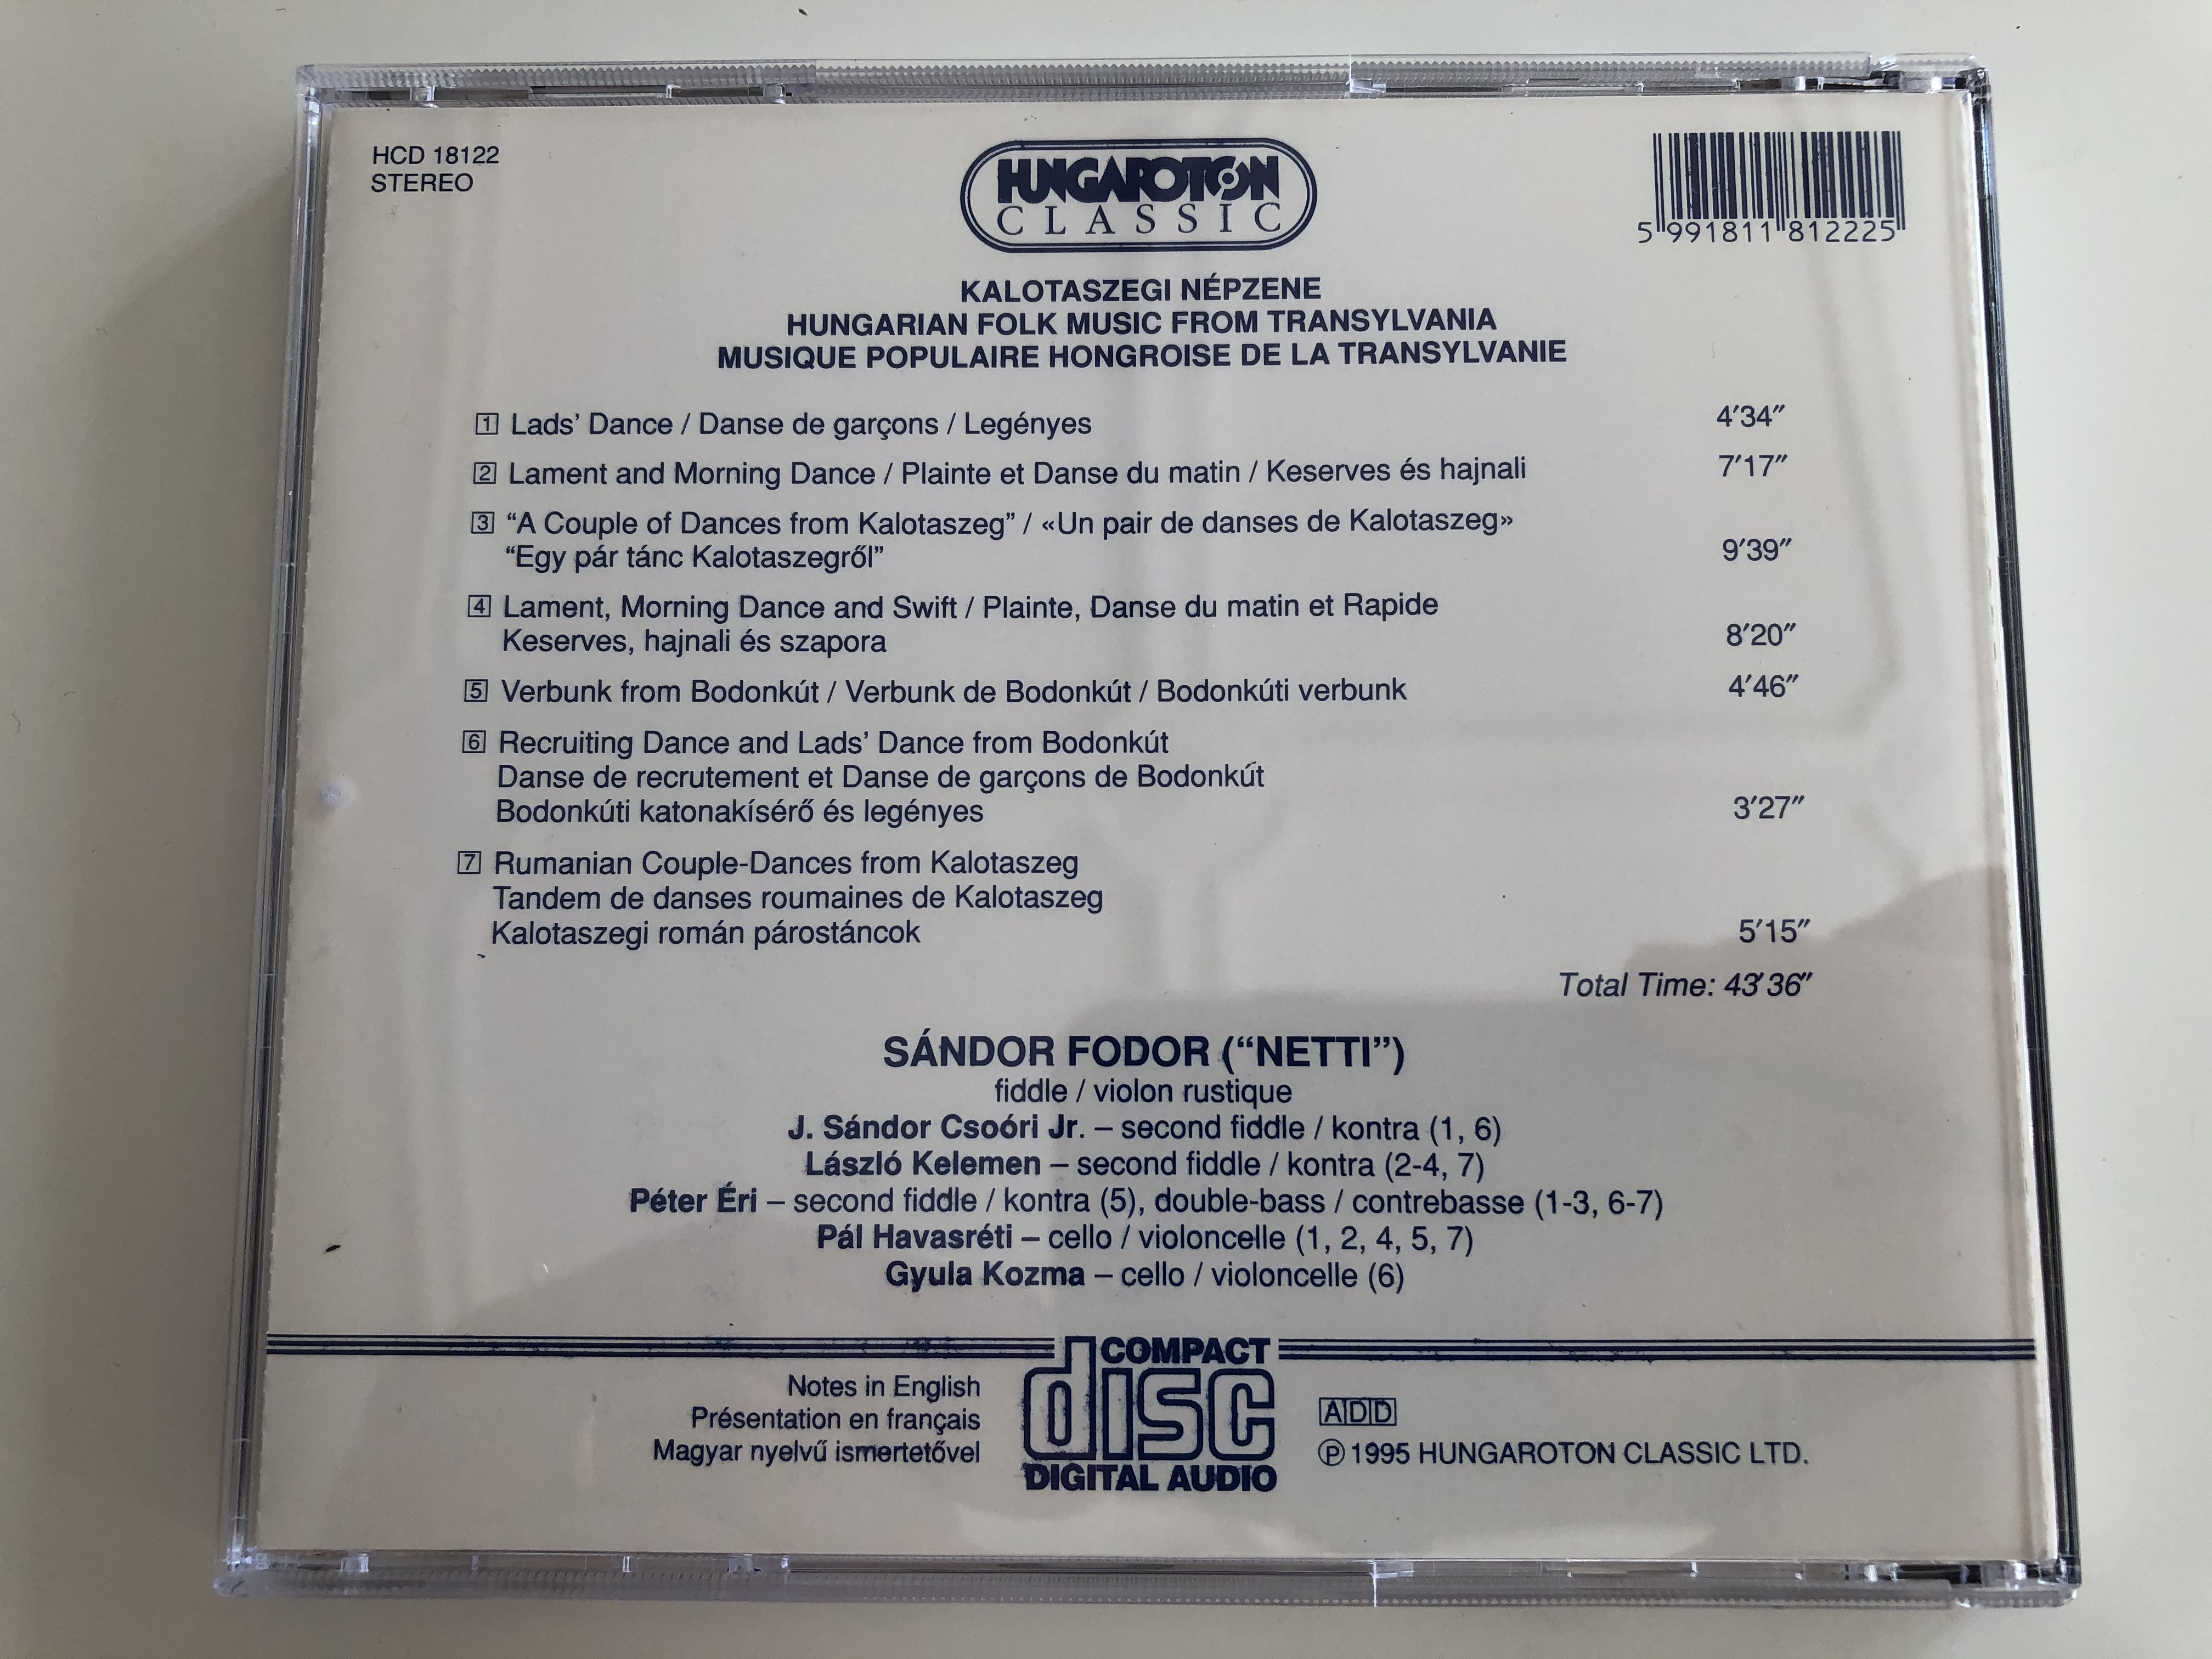 kalotaszegi-n-pzene-hungarian-folk-music-from-transylvania-s-ndor-fodor-netti-fiddleviolin-ristique-hungaroton-classic-audio-cd-1994-stereo-hcd-18122-7-.jpg